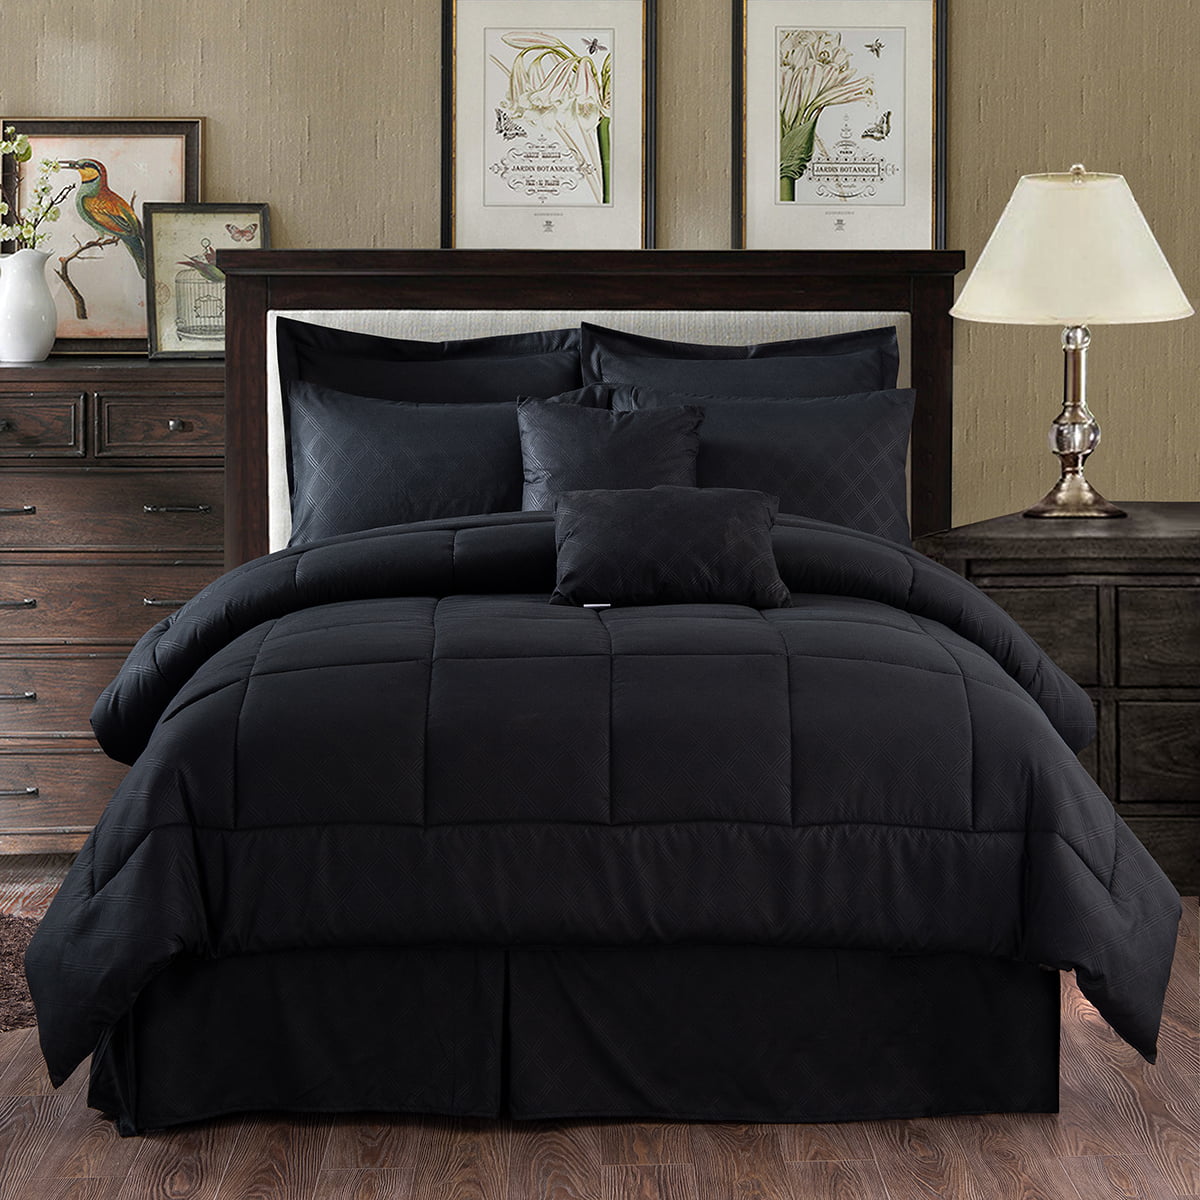 VCNY 8 Piece Ogee Soft Washed Comforter Set Dec Pillow Bonus Sheet Set Black